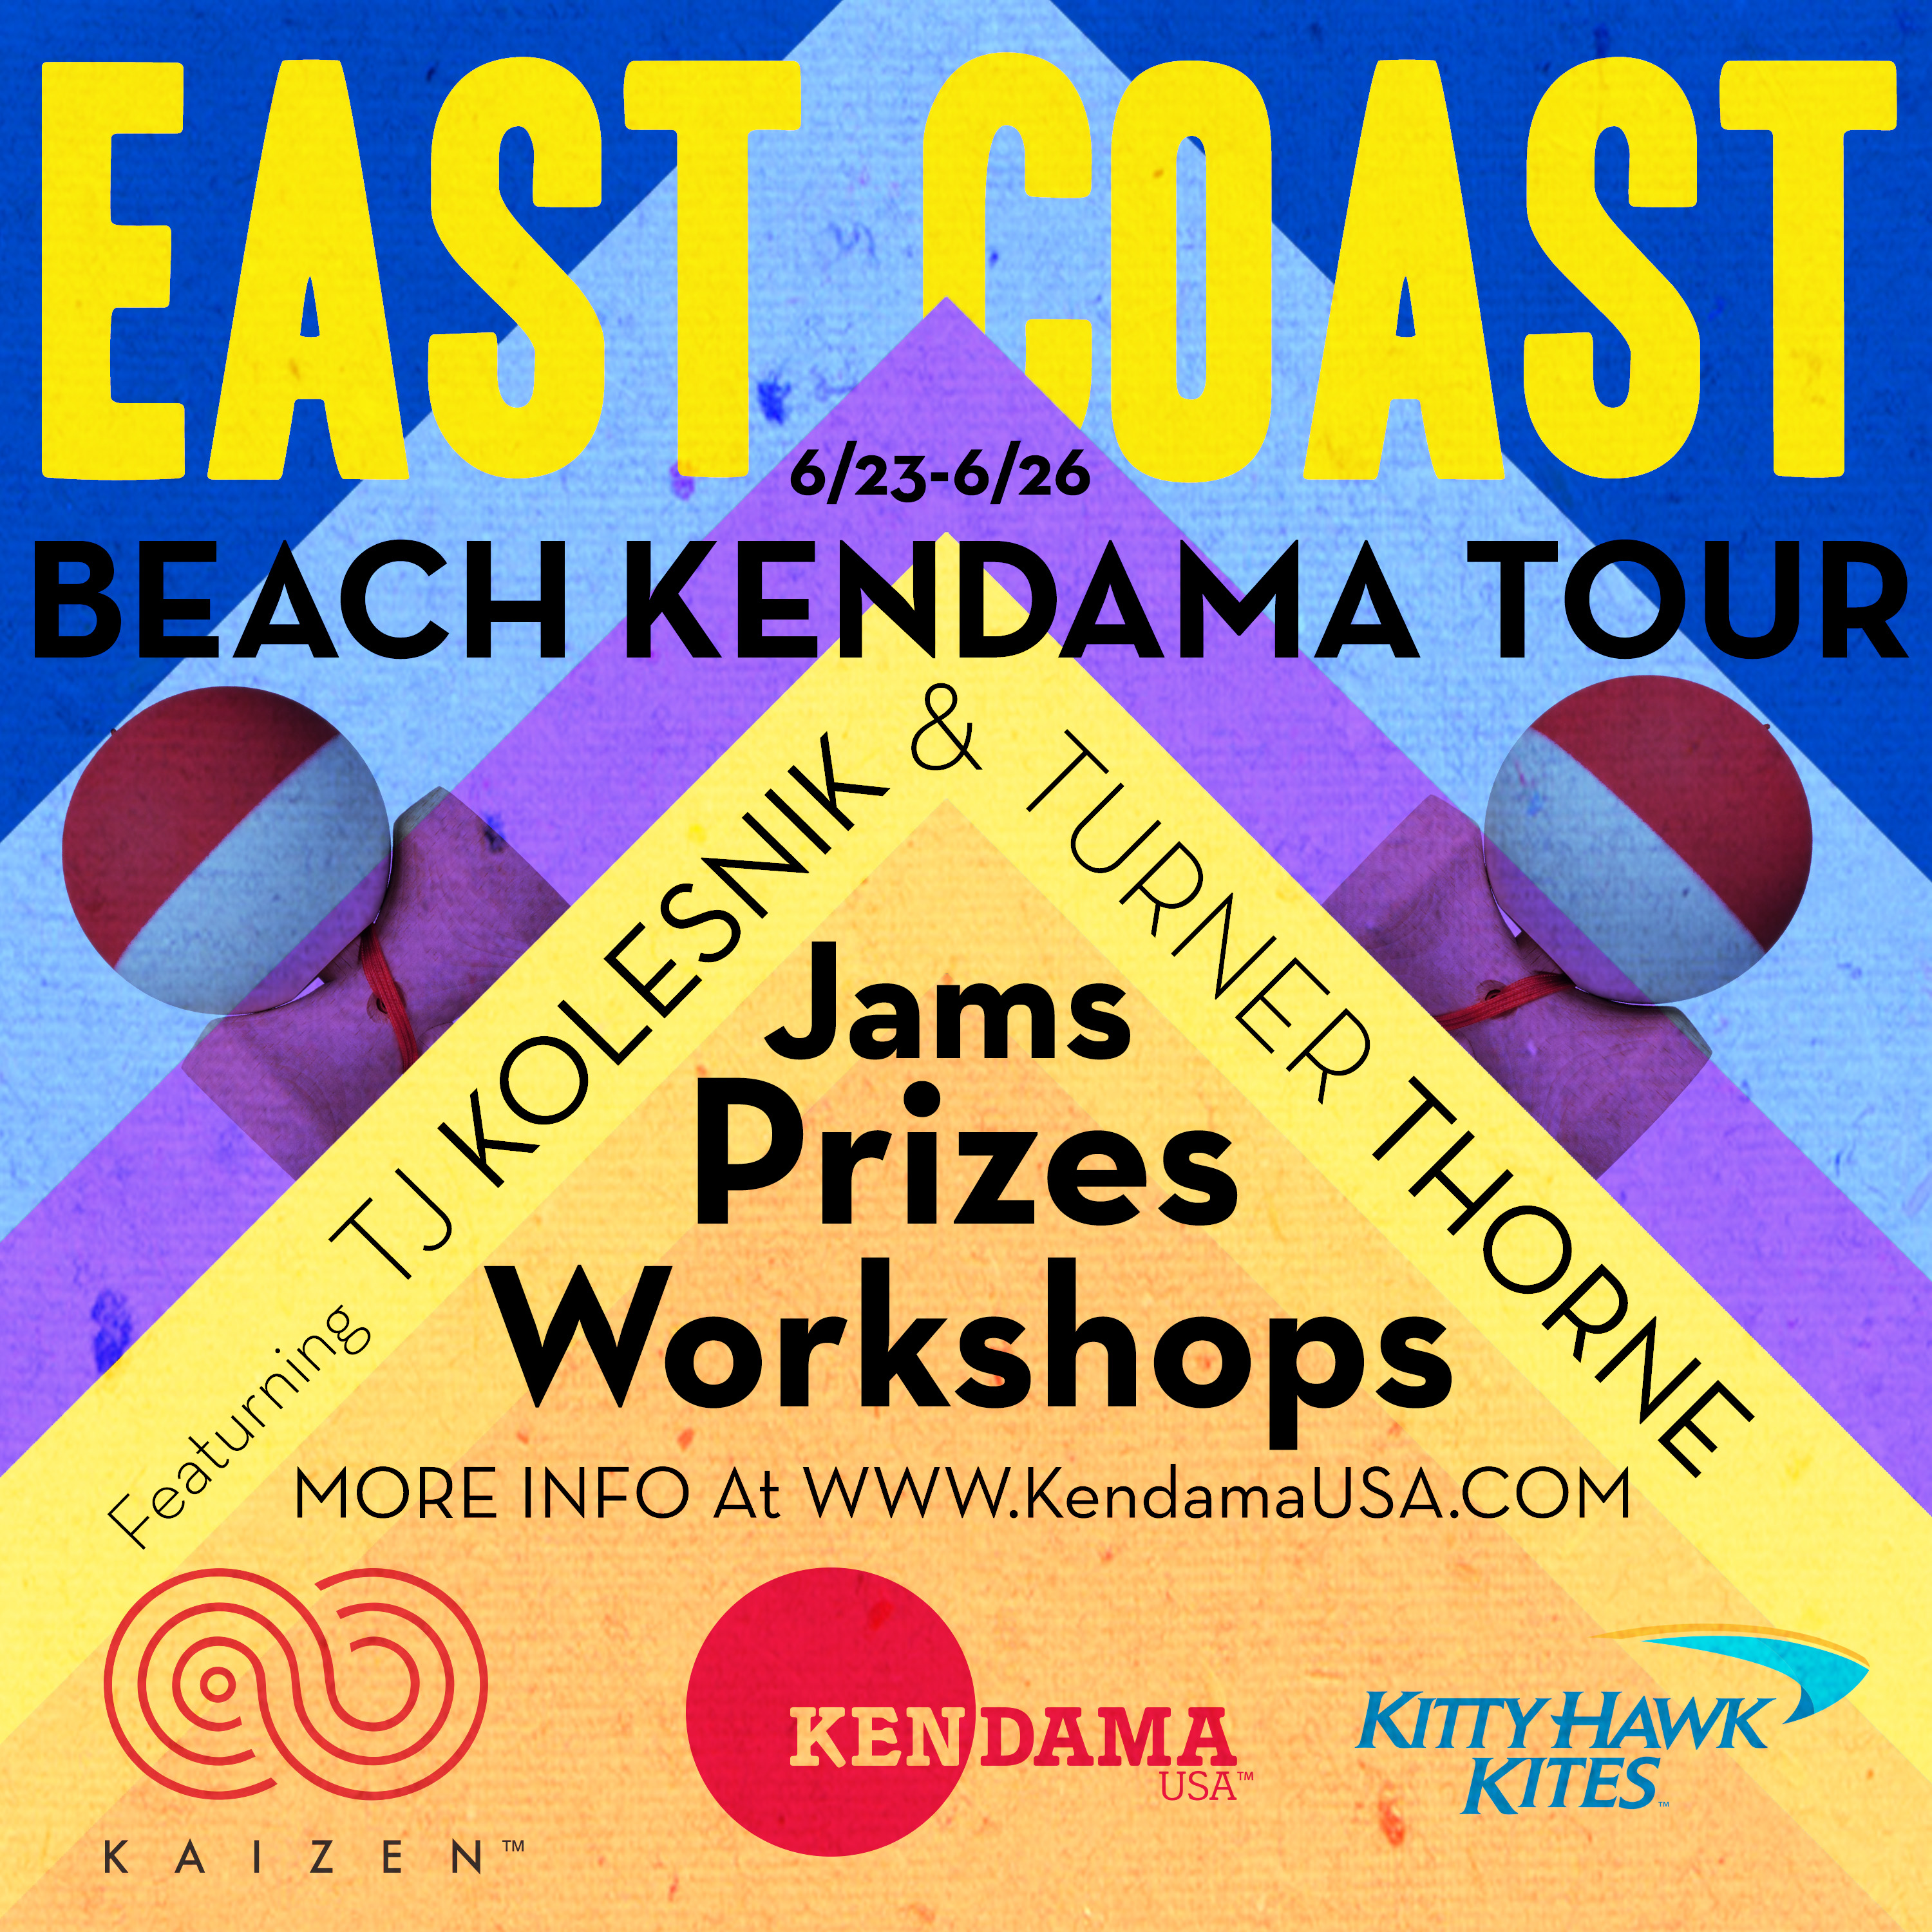 East Coast Beach Kendama Tour